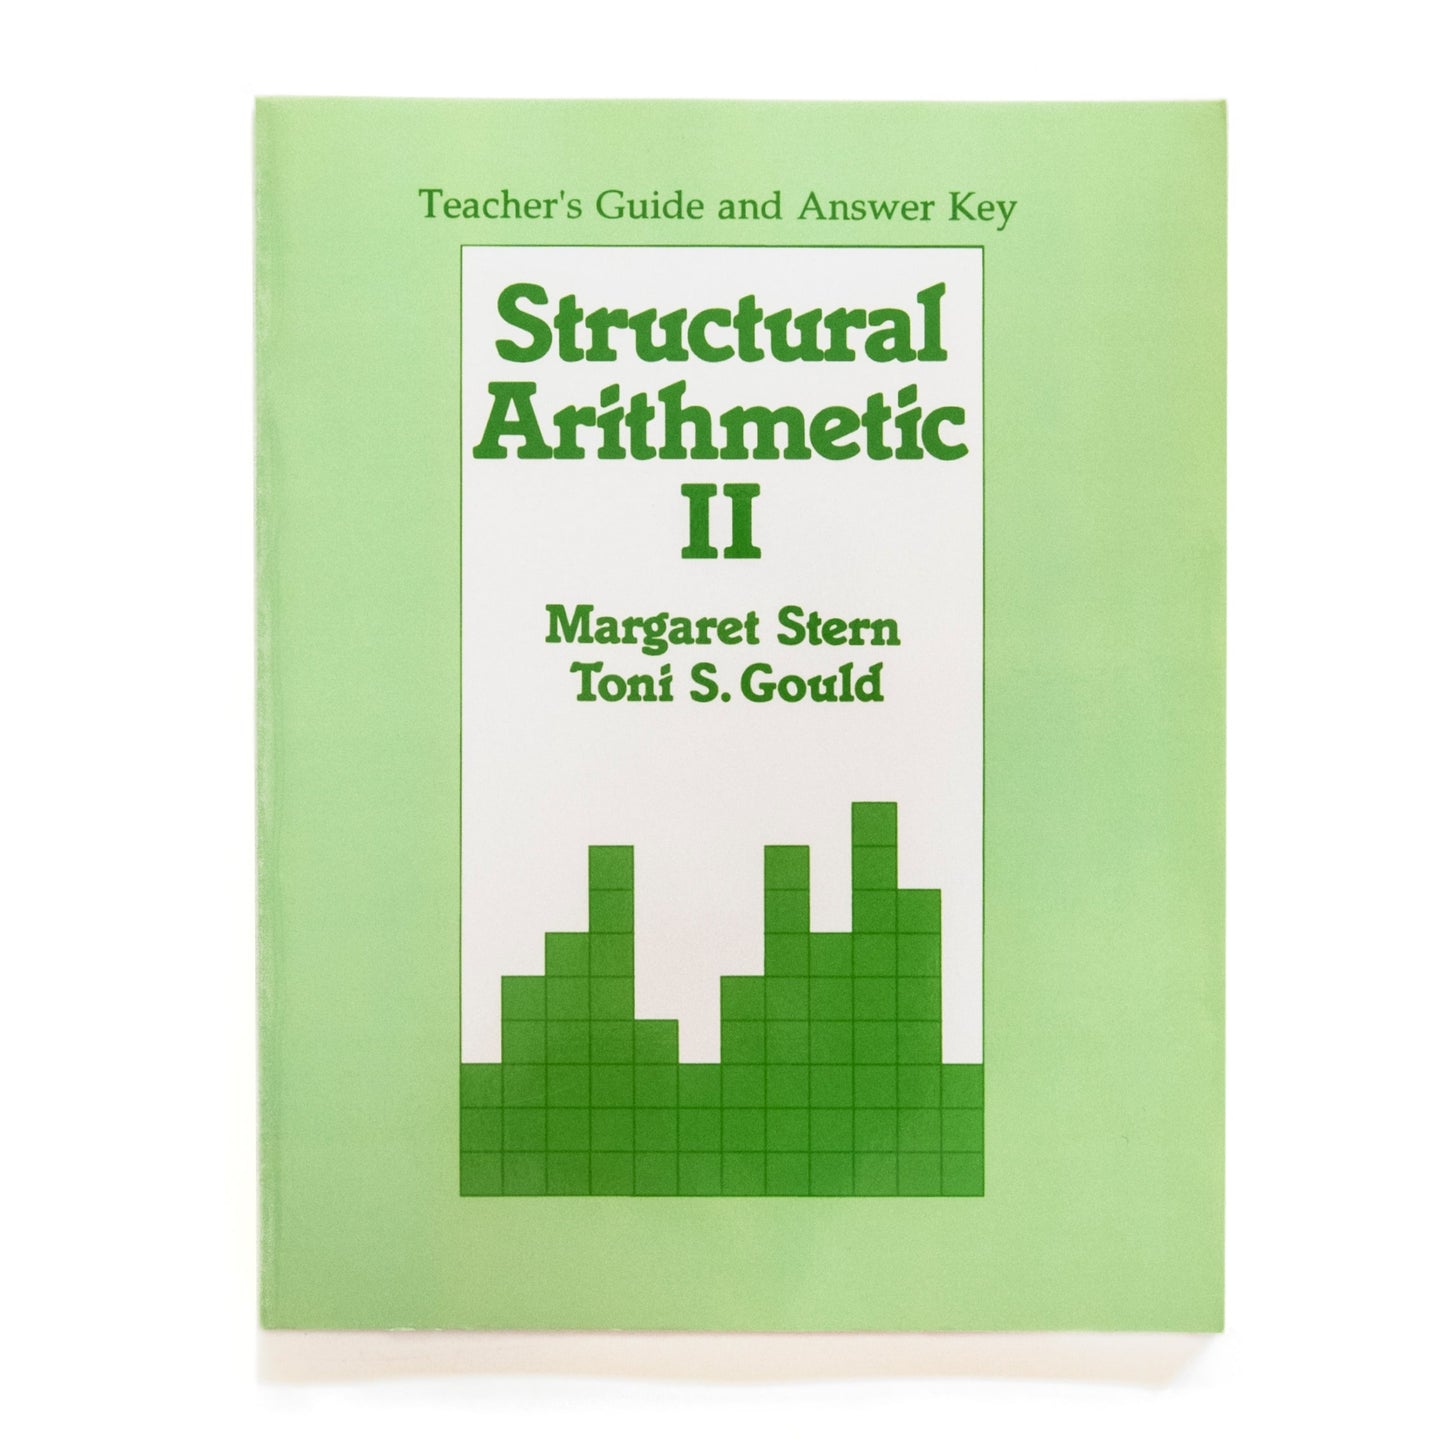 Structural Arithmetic II: Teachers Guide